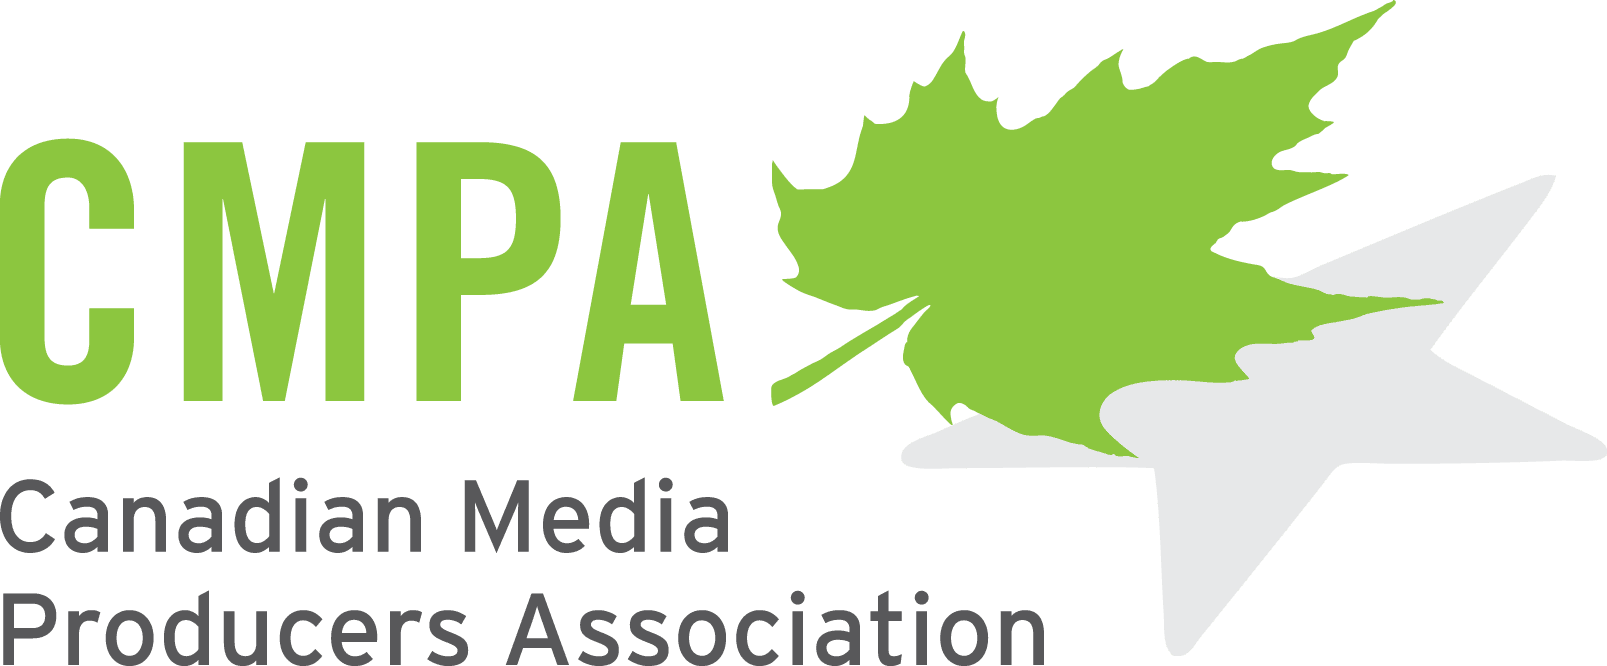 CMPA Health Plus Insurance